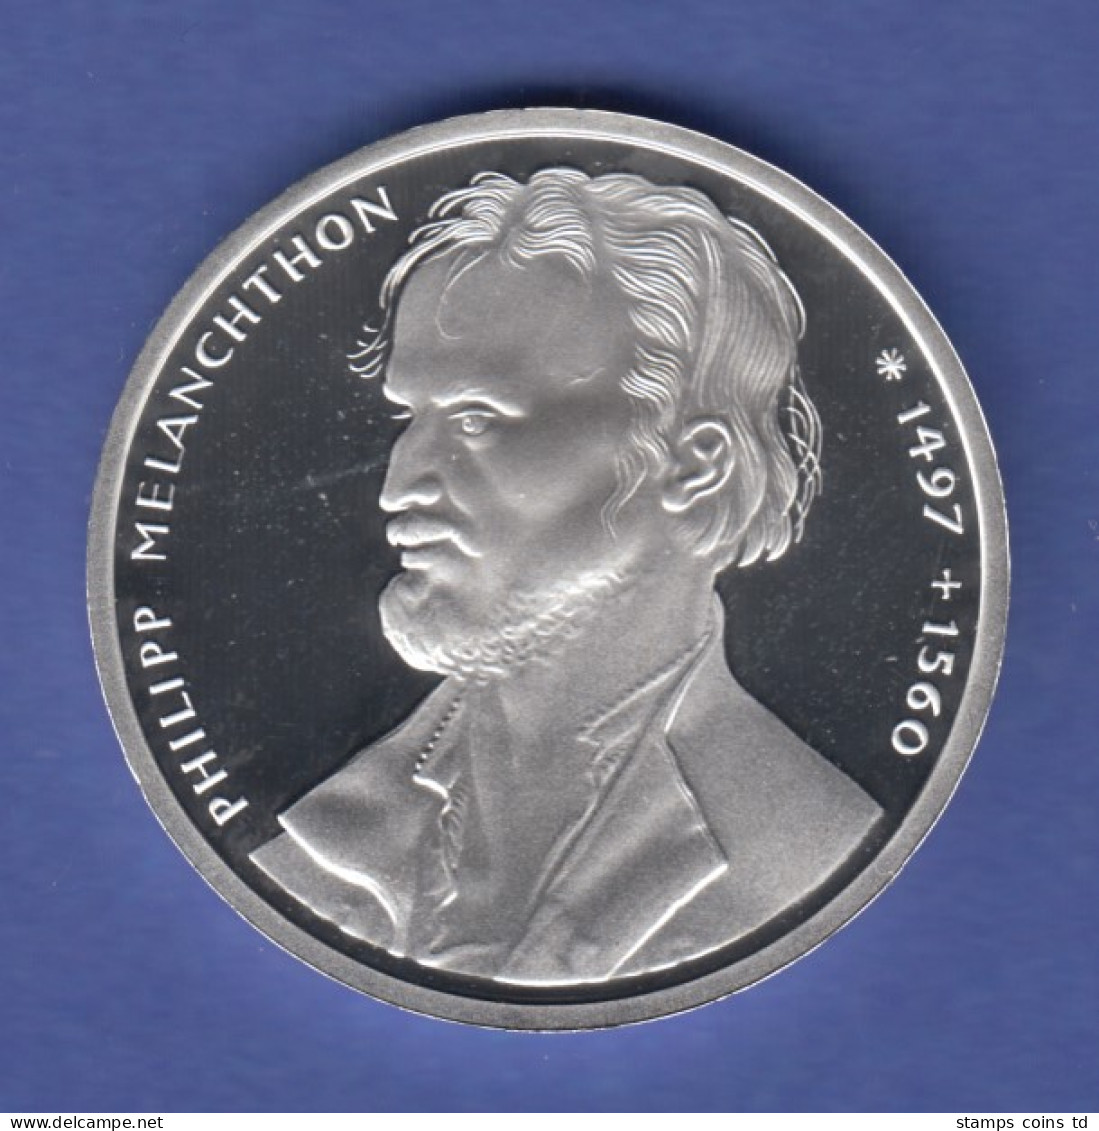 Bundesrepublik 10DM Silber-Gedenkmünze 1997 Philipp Melanchthon PP - 10 Mark